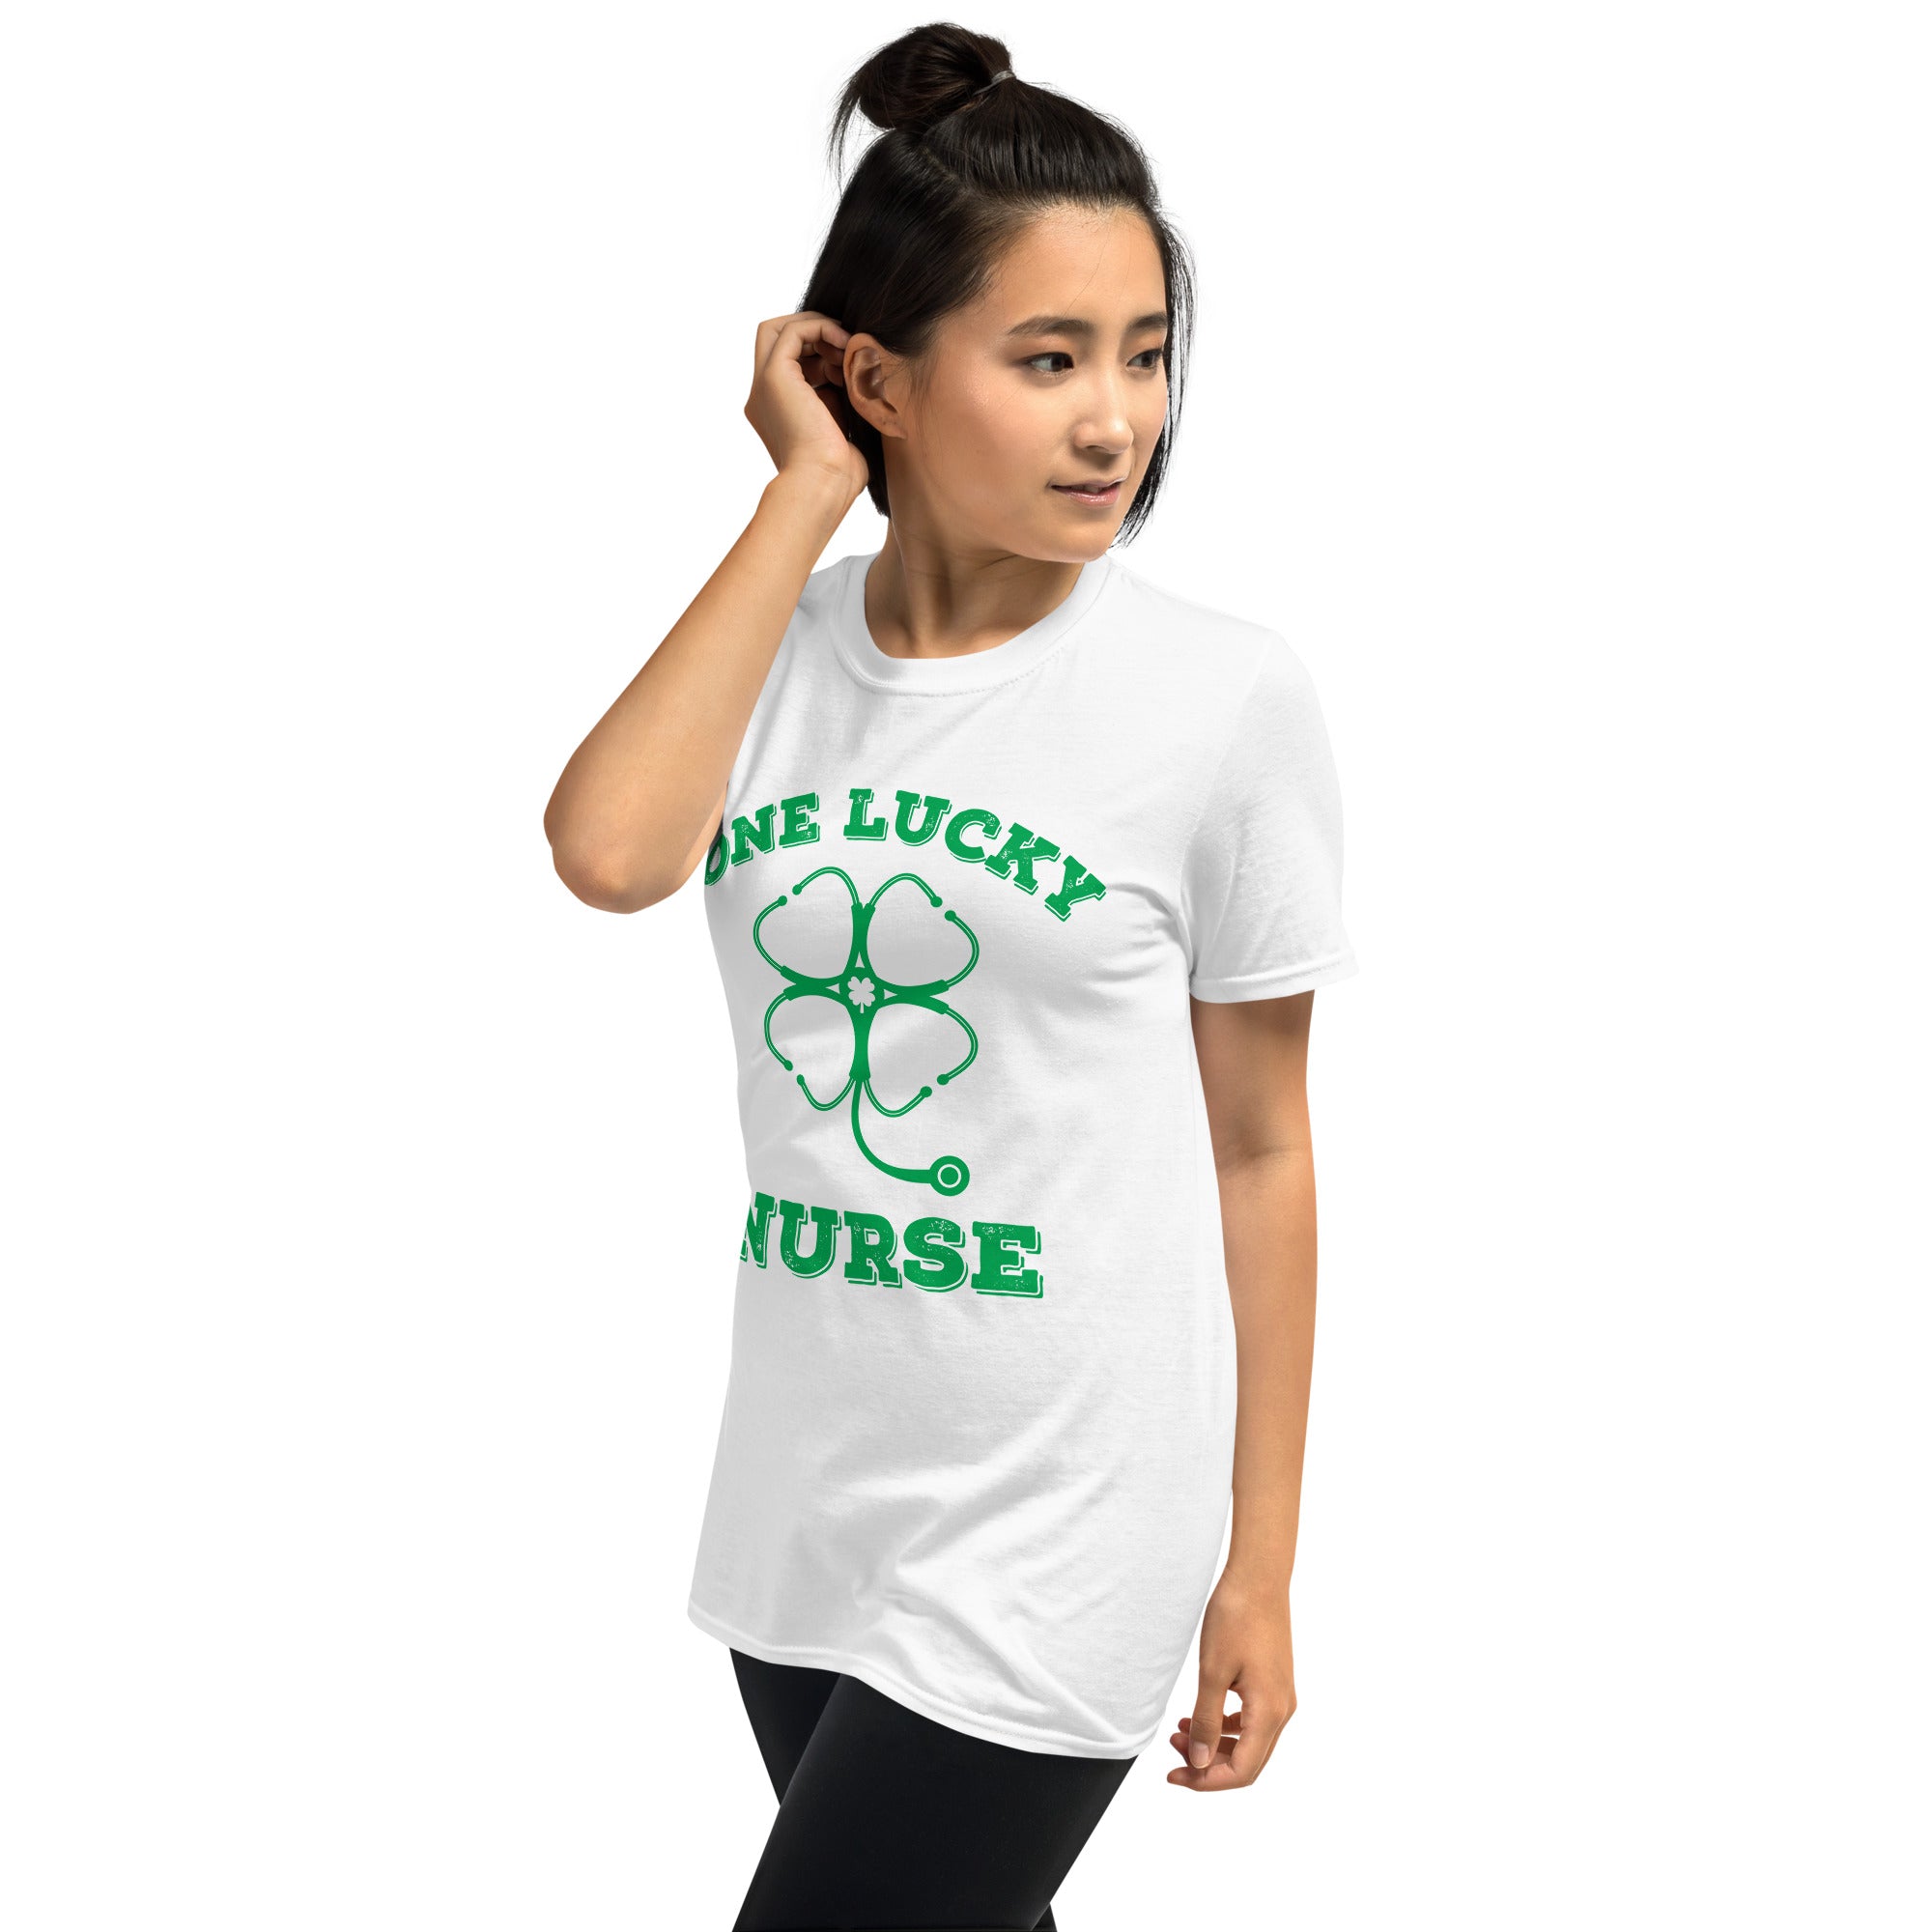 St Patricks Nurse Shirt, One Lucky Nurse TShirt, Irish Nurse Gift, Shamrock Stethoscope, Nurse Gifts for Saint Patricks, Lucky Nurse Shirt - Madeinsea©